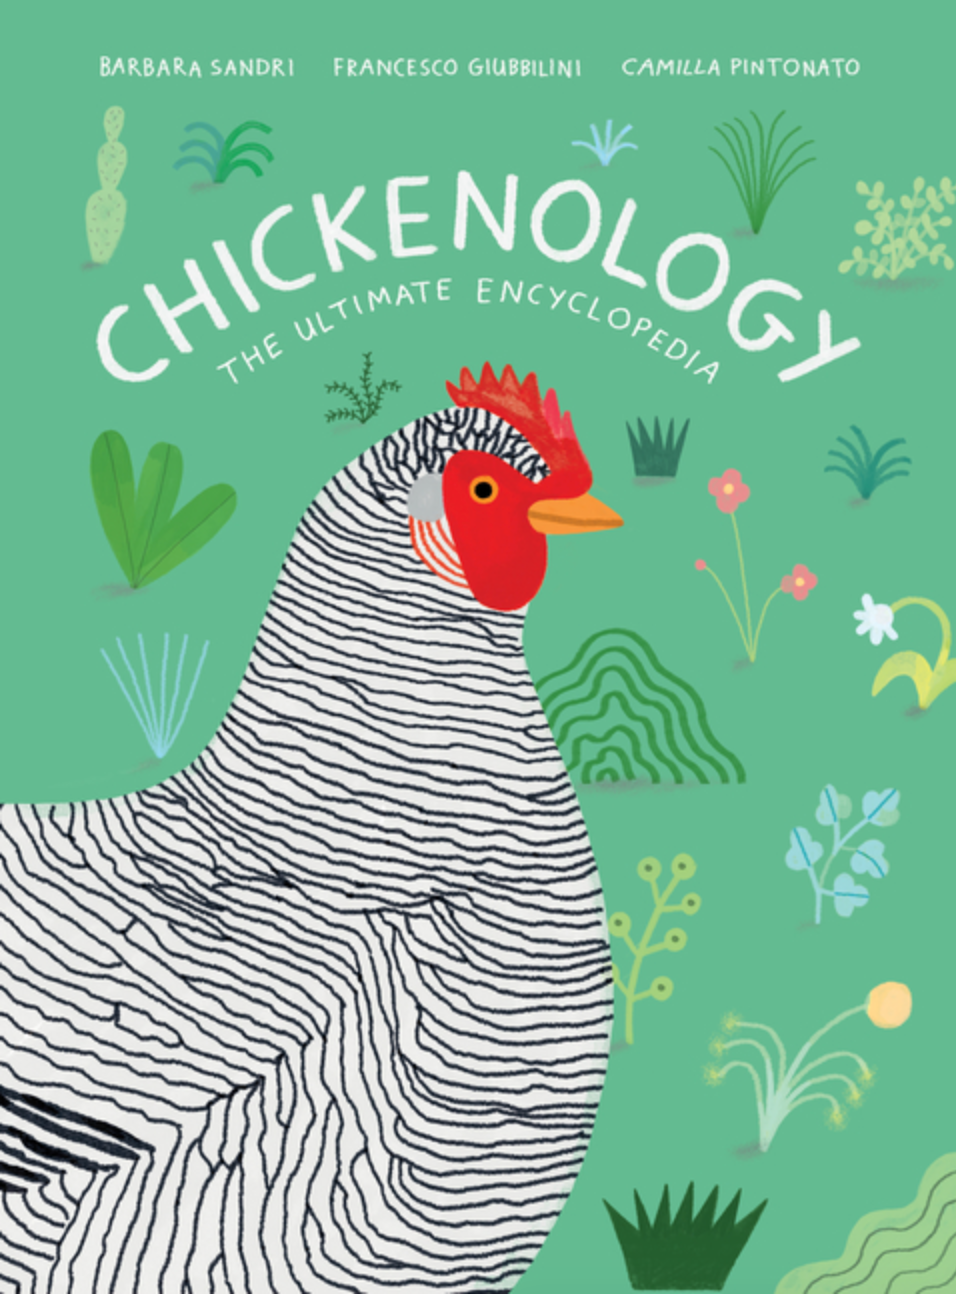 chickenology book